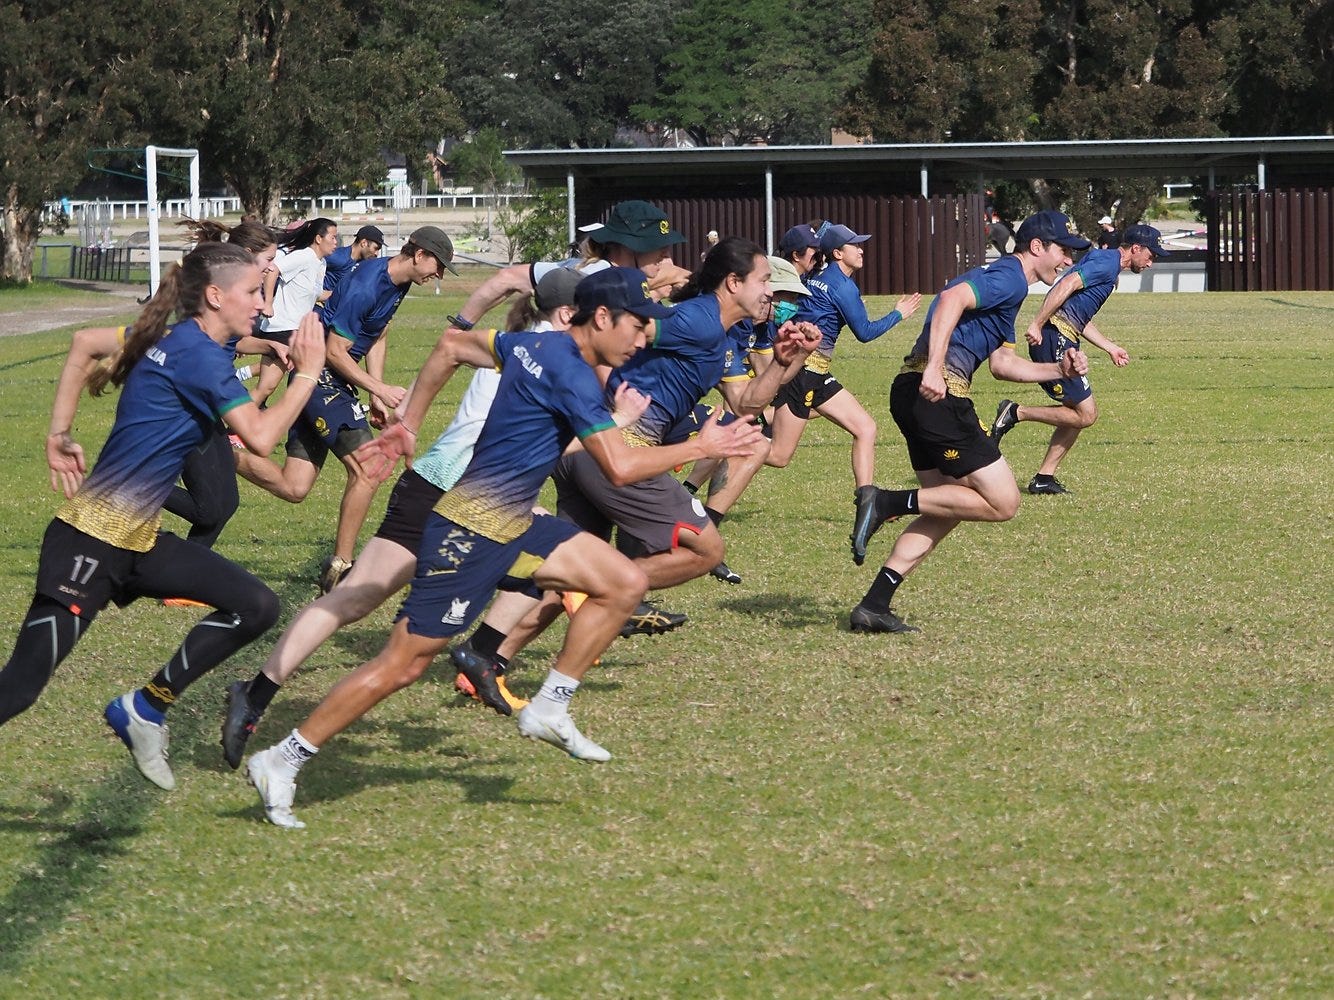 Crocs 2022 Team Australia players running on InsideOut Ultimate